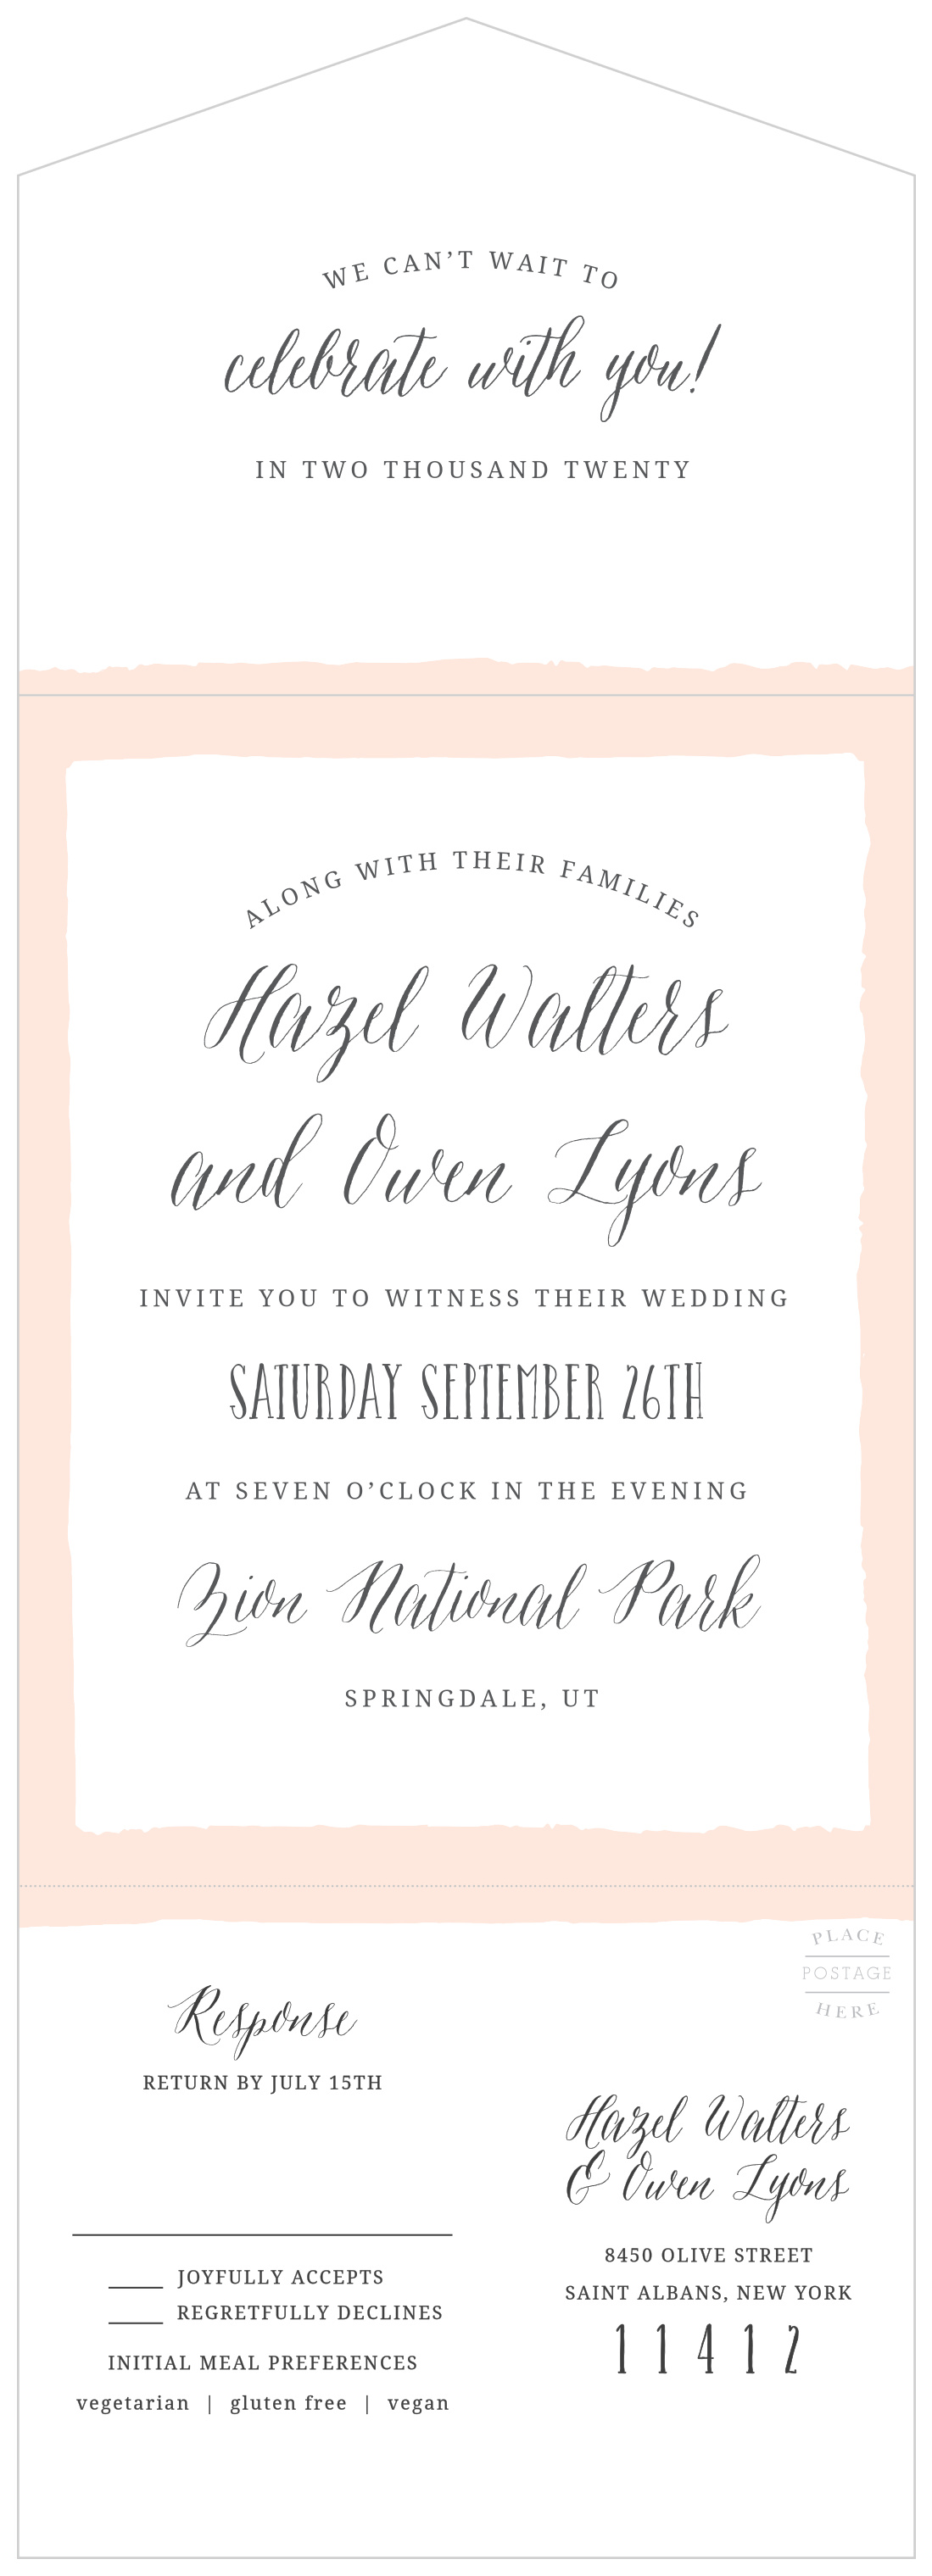 Painted Border Seal & Send Wedding Invitations